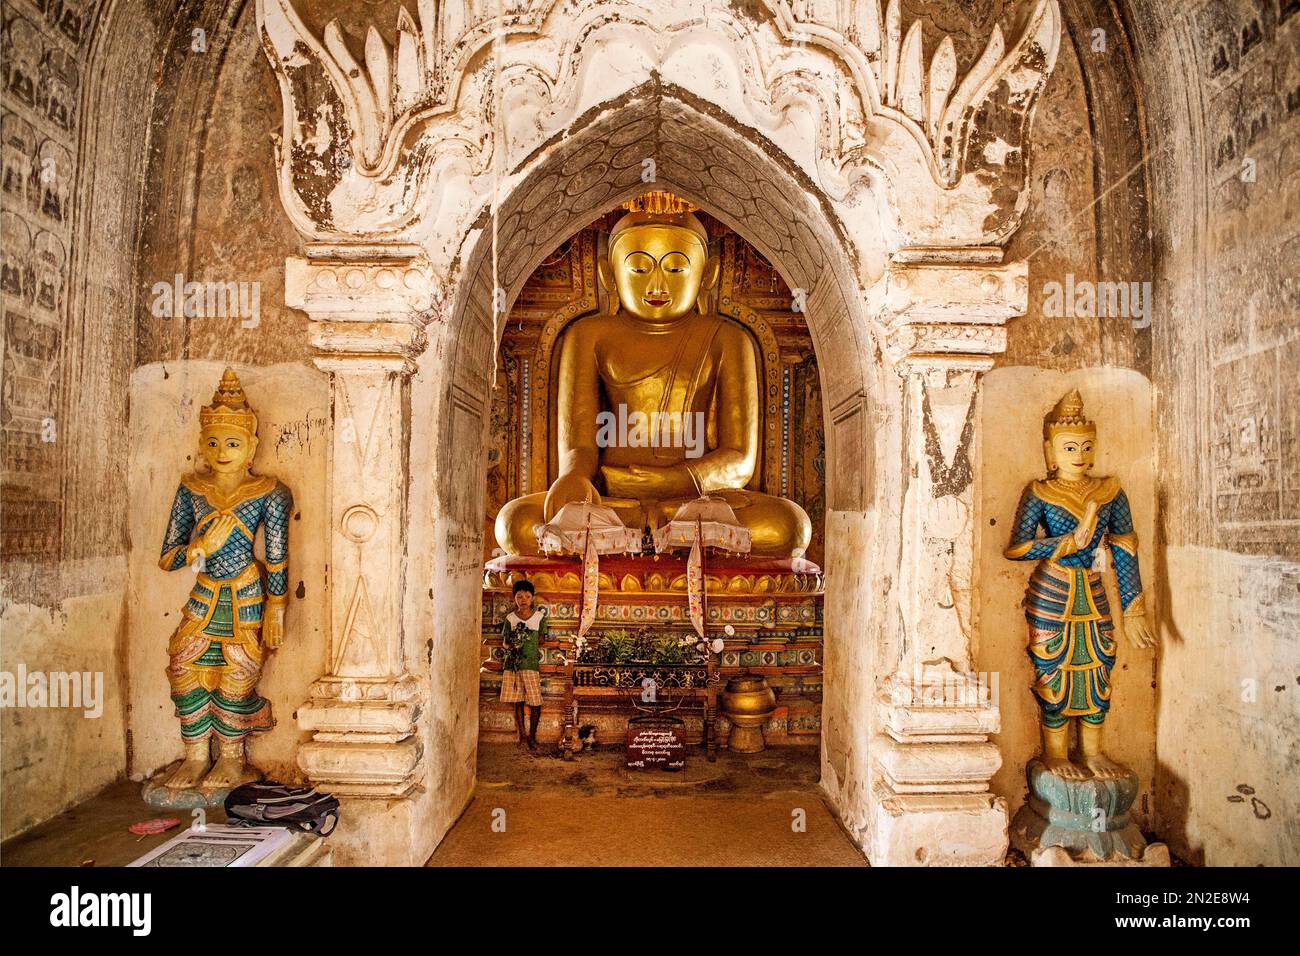 Buddha statue in Lei-mvet-hna pagoda, Bagan, Myanmar, Asia Stock Photo